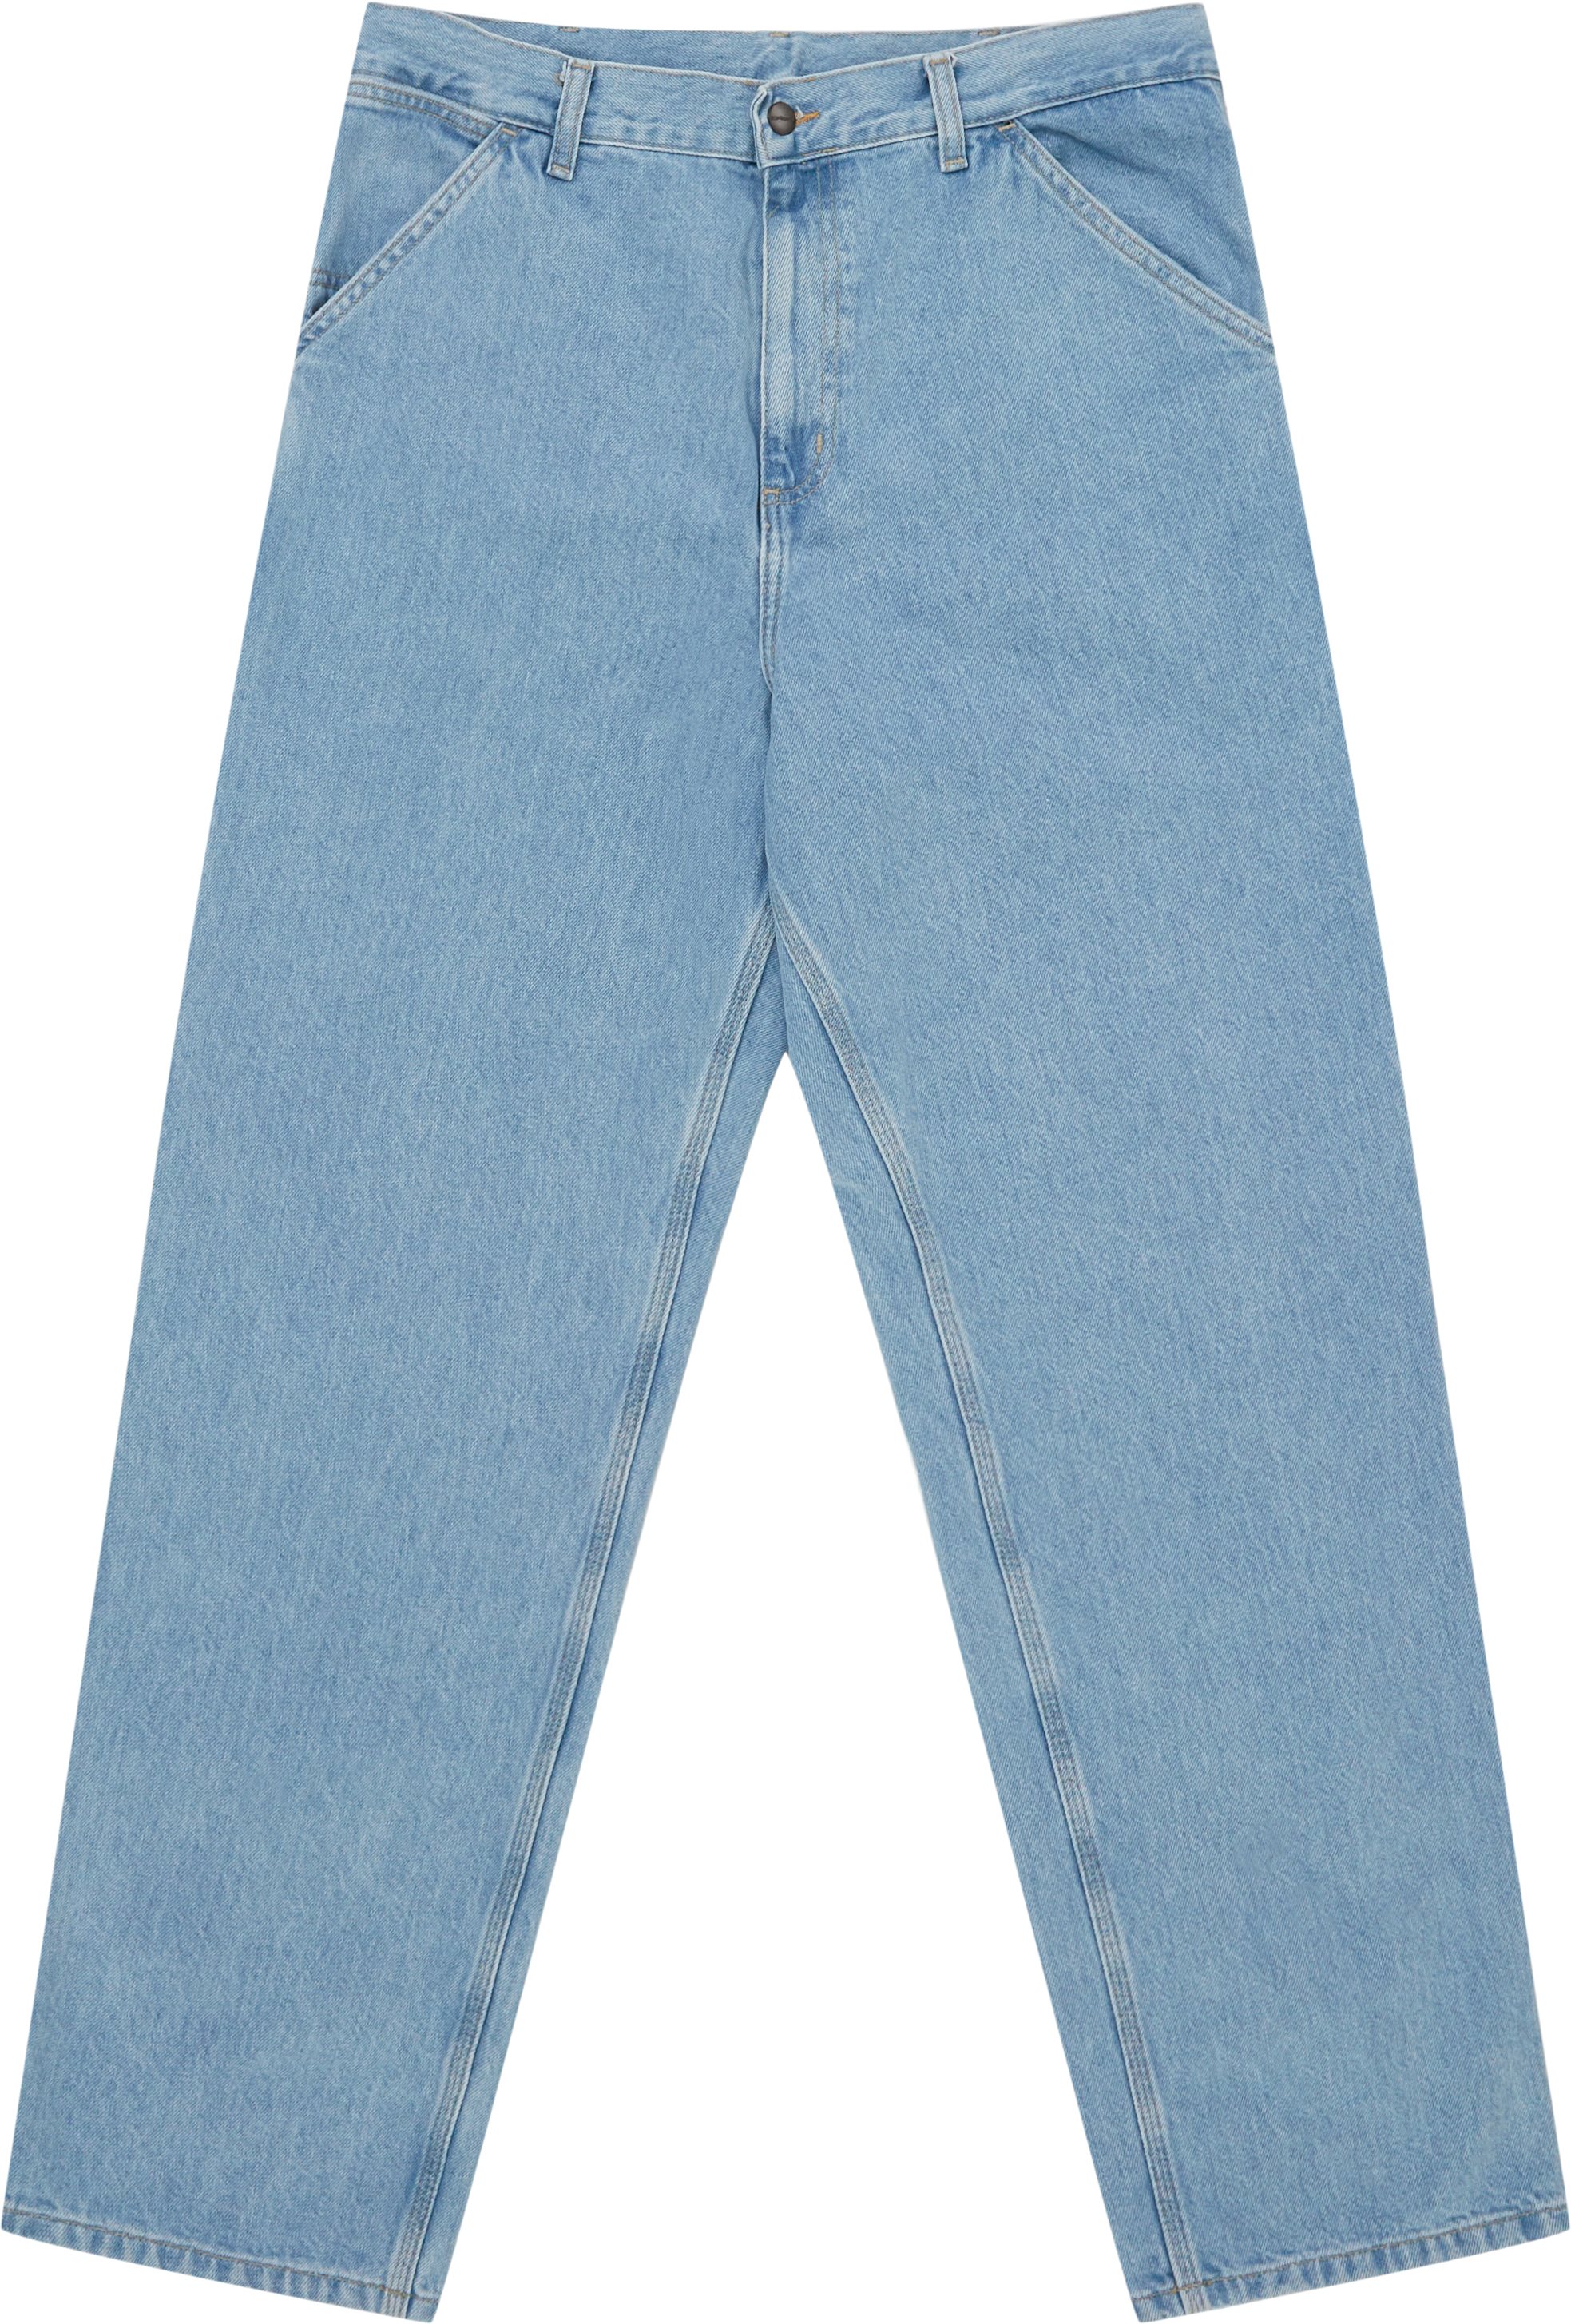 Carhartt WIP Jeans SINGLE KNEE I032024.01.A3 Denim